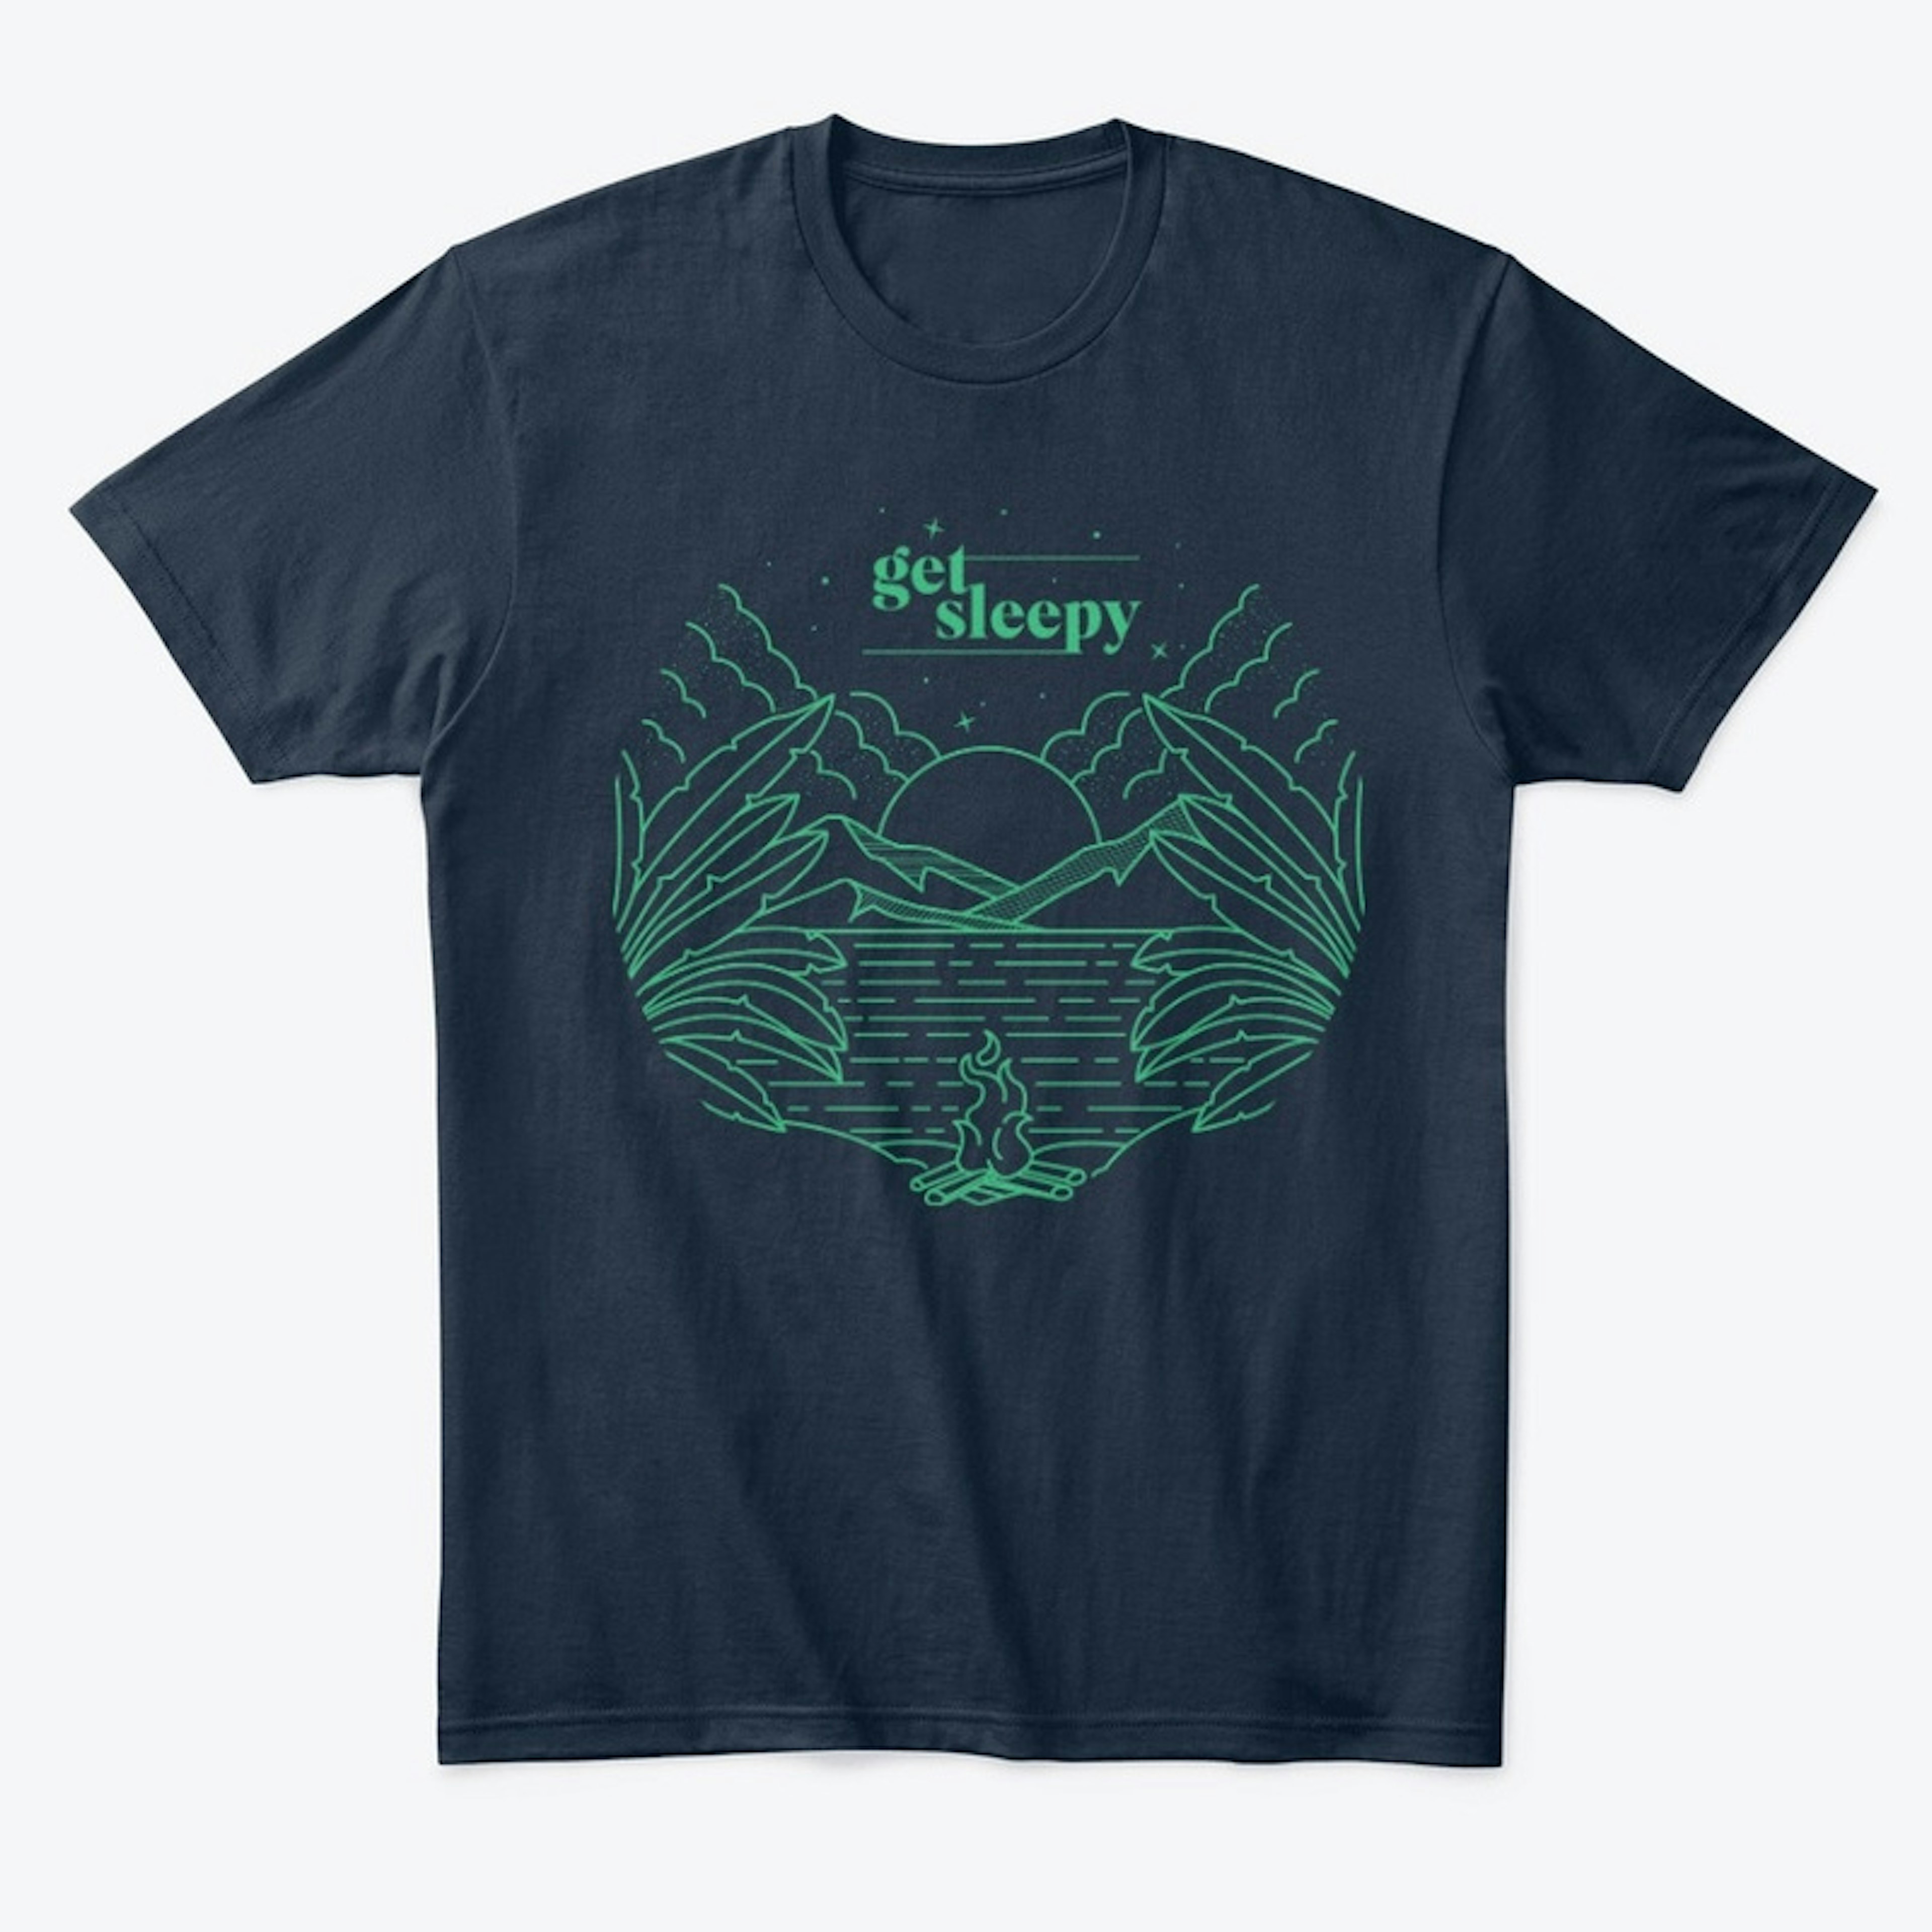 Get Sleepy Unisex Graphic T-Shirt